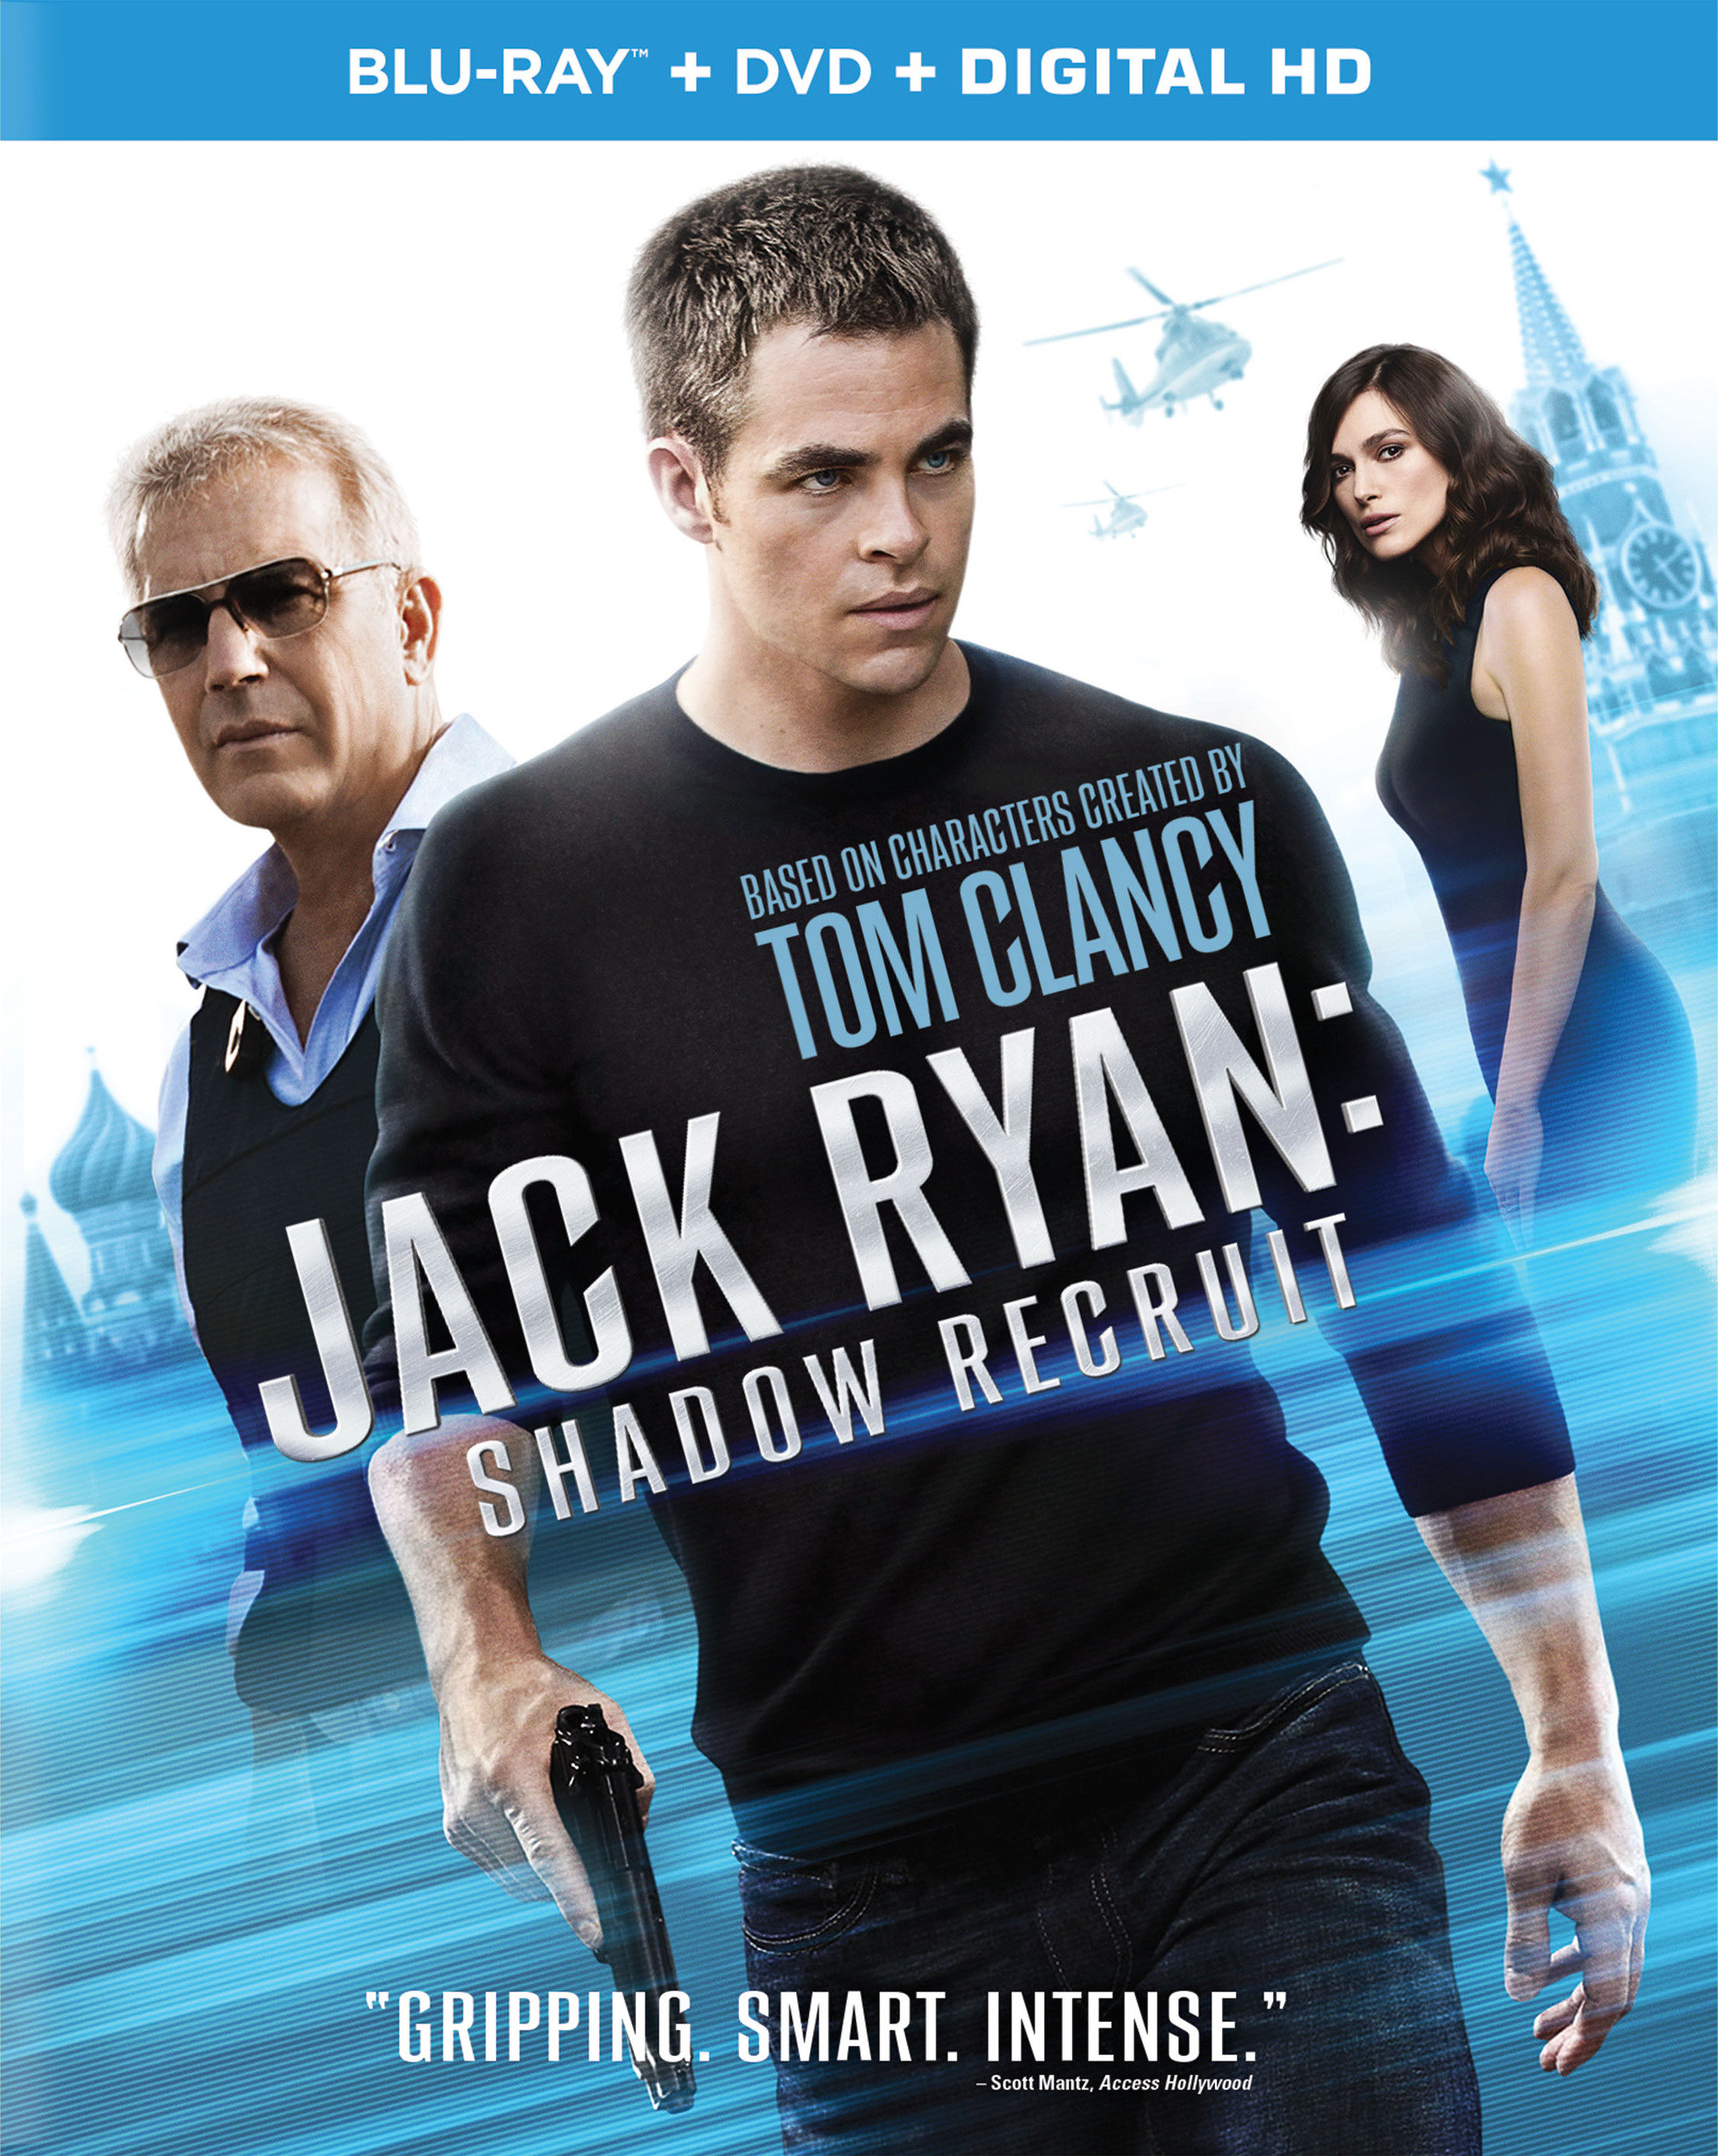 Jack Ryan: Shadow Recruit #4